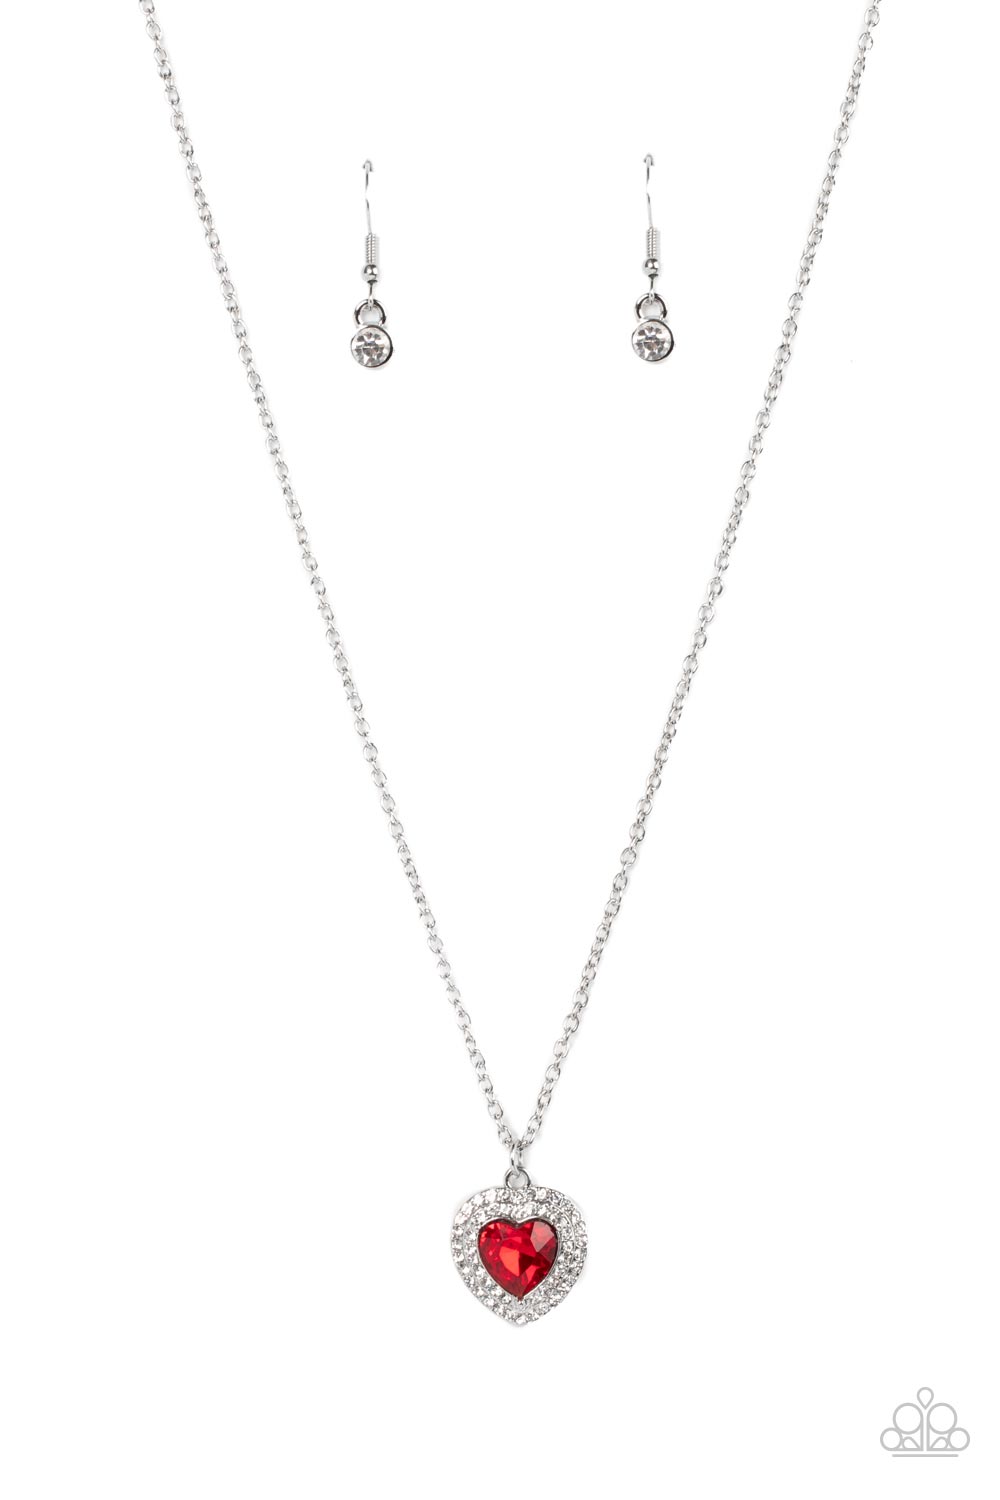 Shine on the Heart Rhinestone Necklace - LilyFair Jewelry